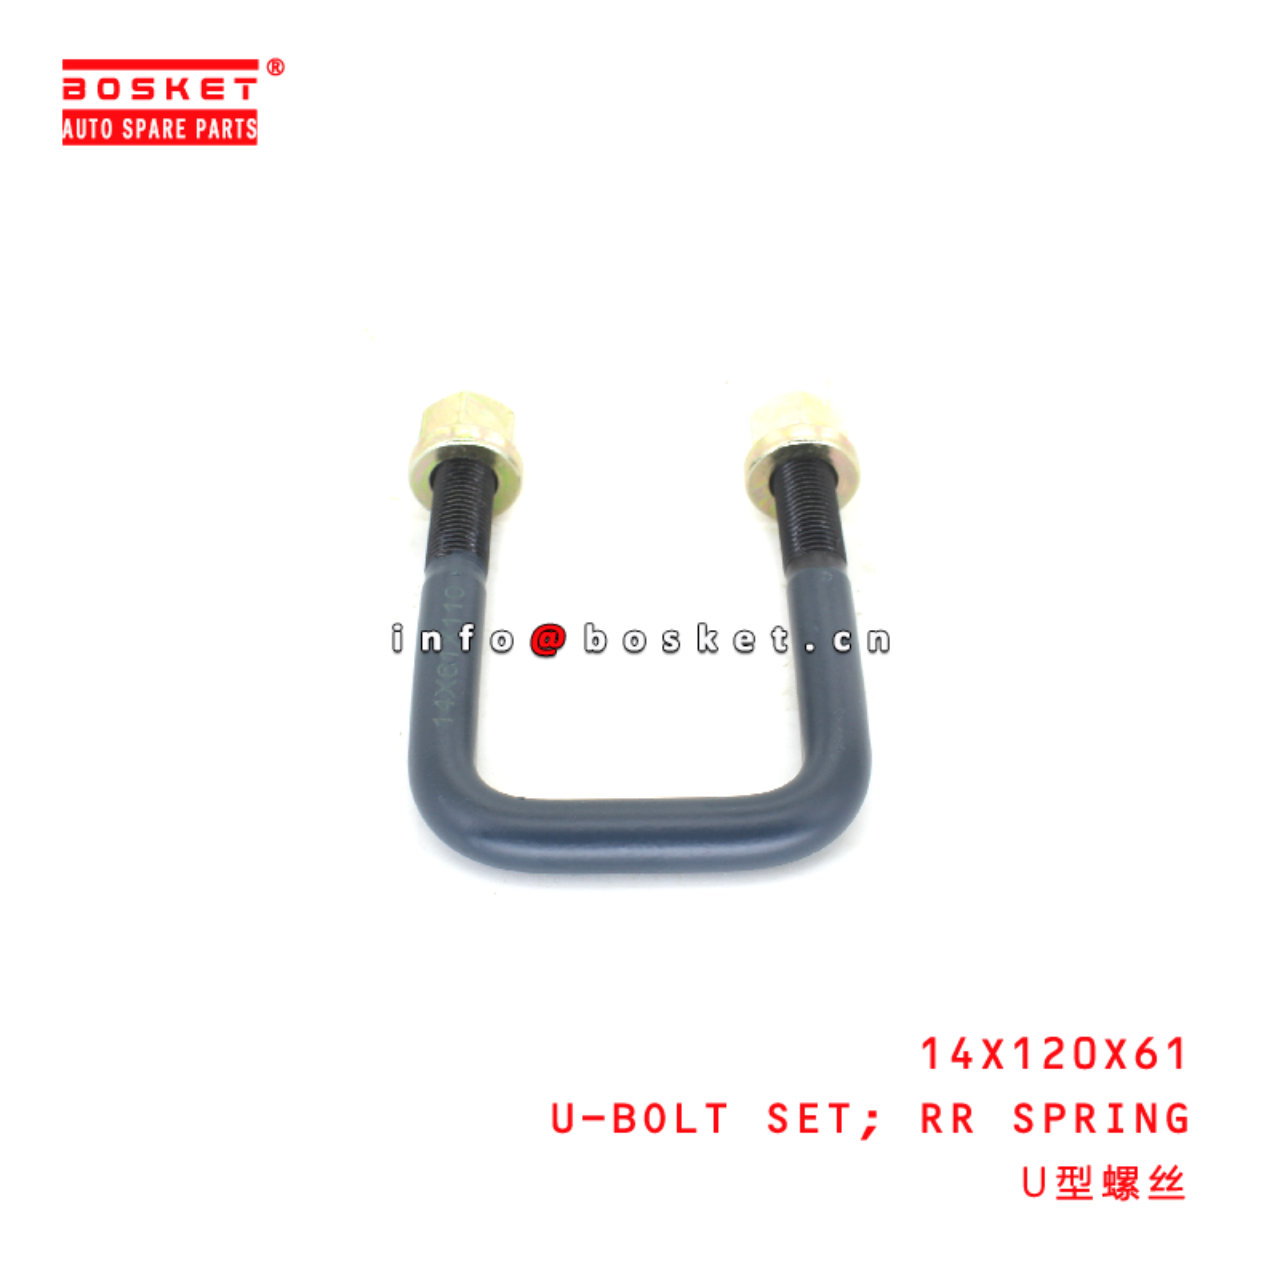 14X120X61 Rear Spring U-Bolt Set suitable for ISUZU 14X120X61